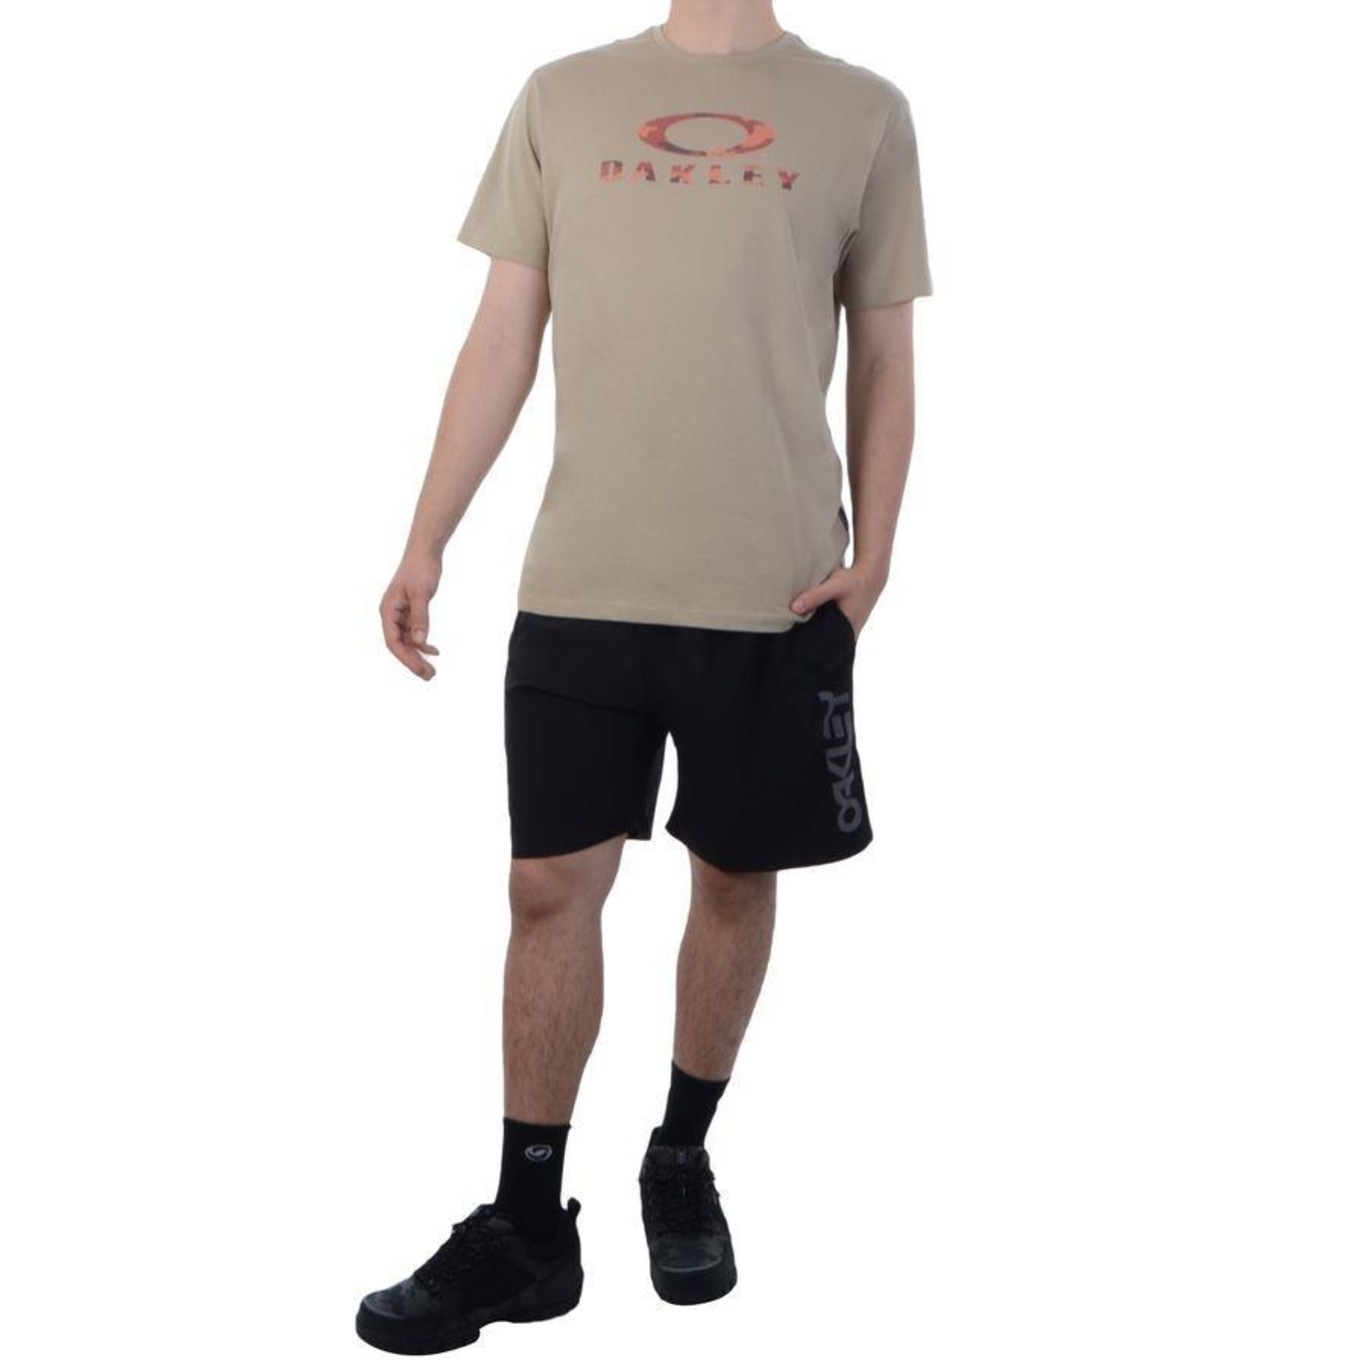 Camiseta Masculina Oakley Arcade Branca - overboard